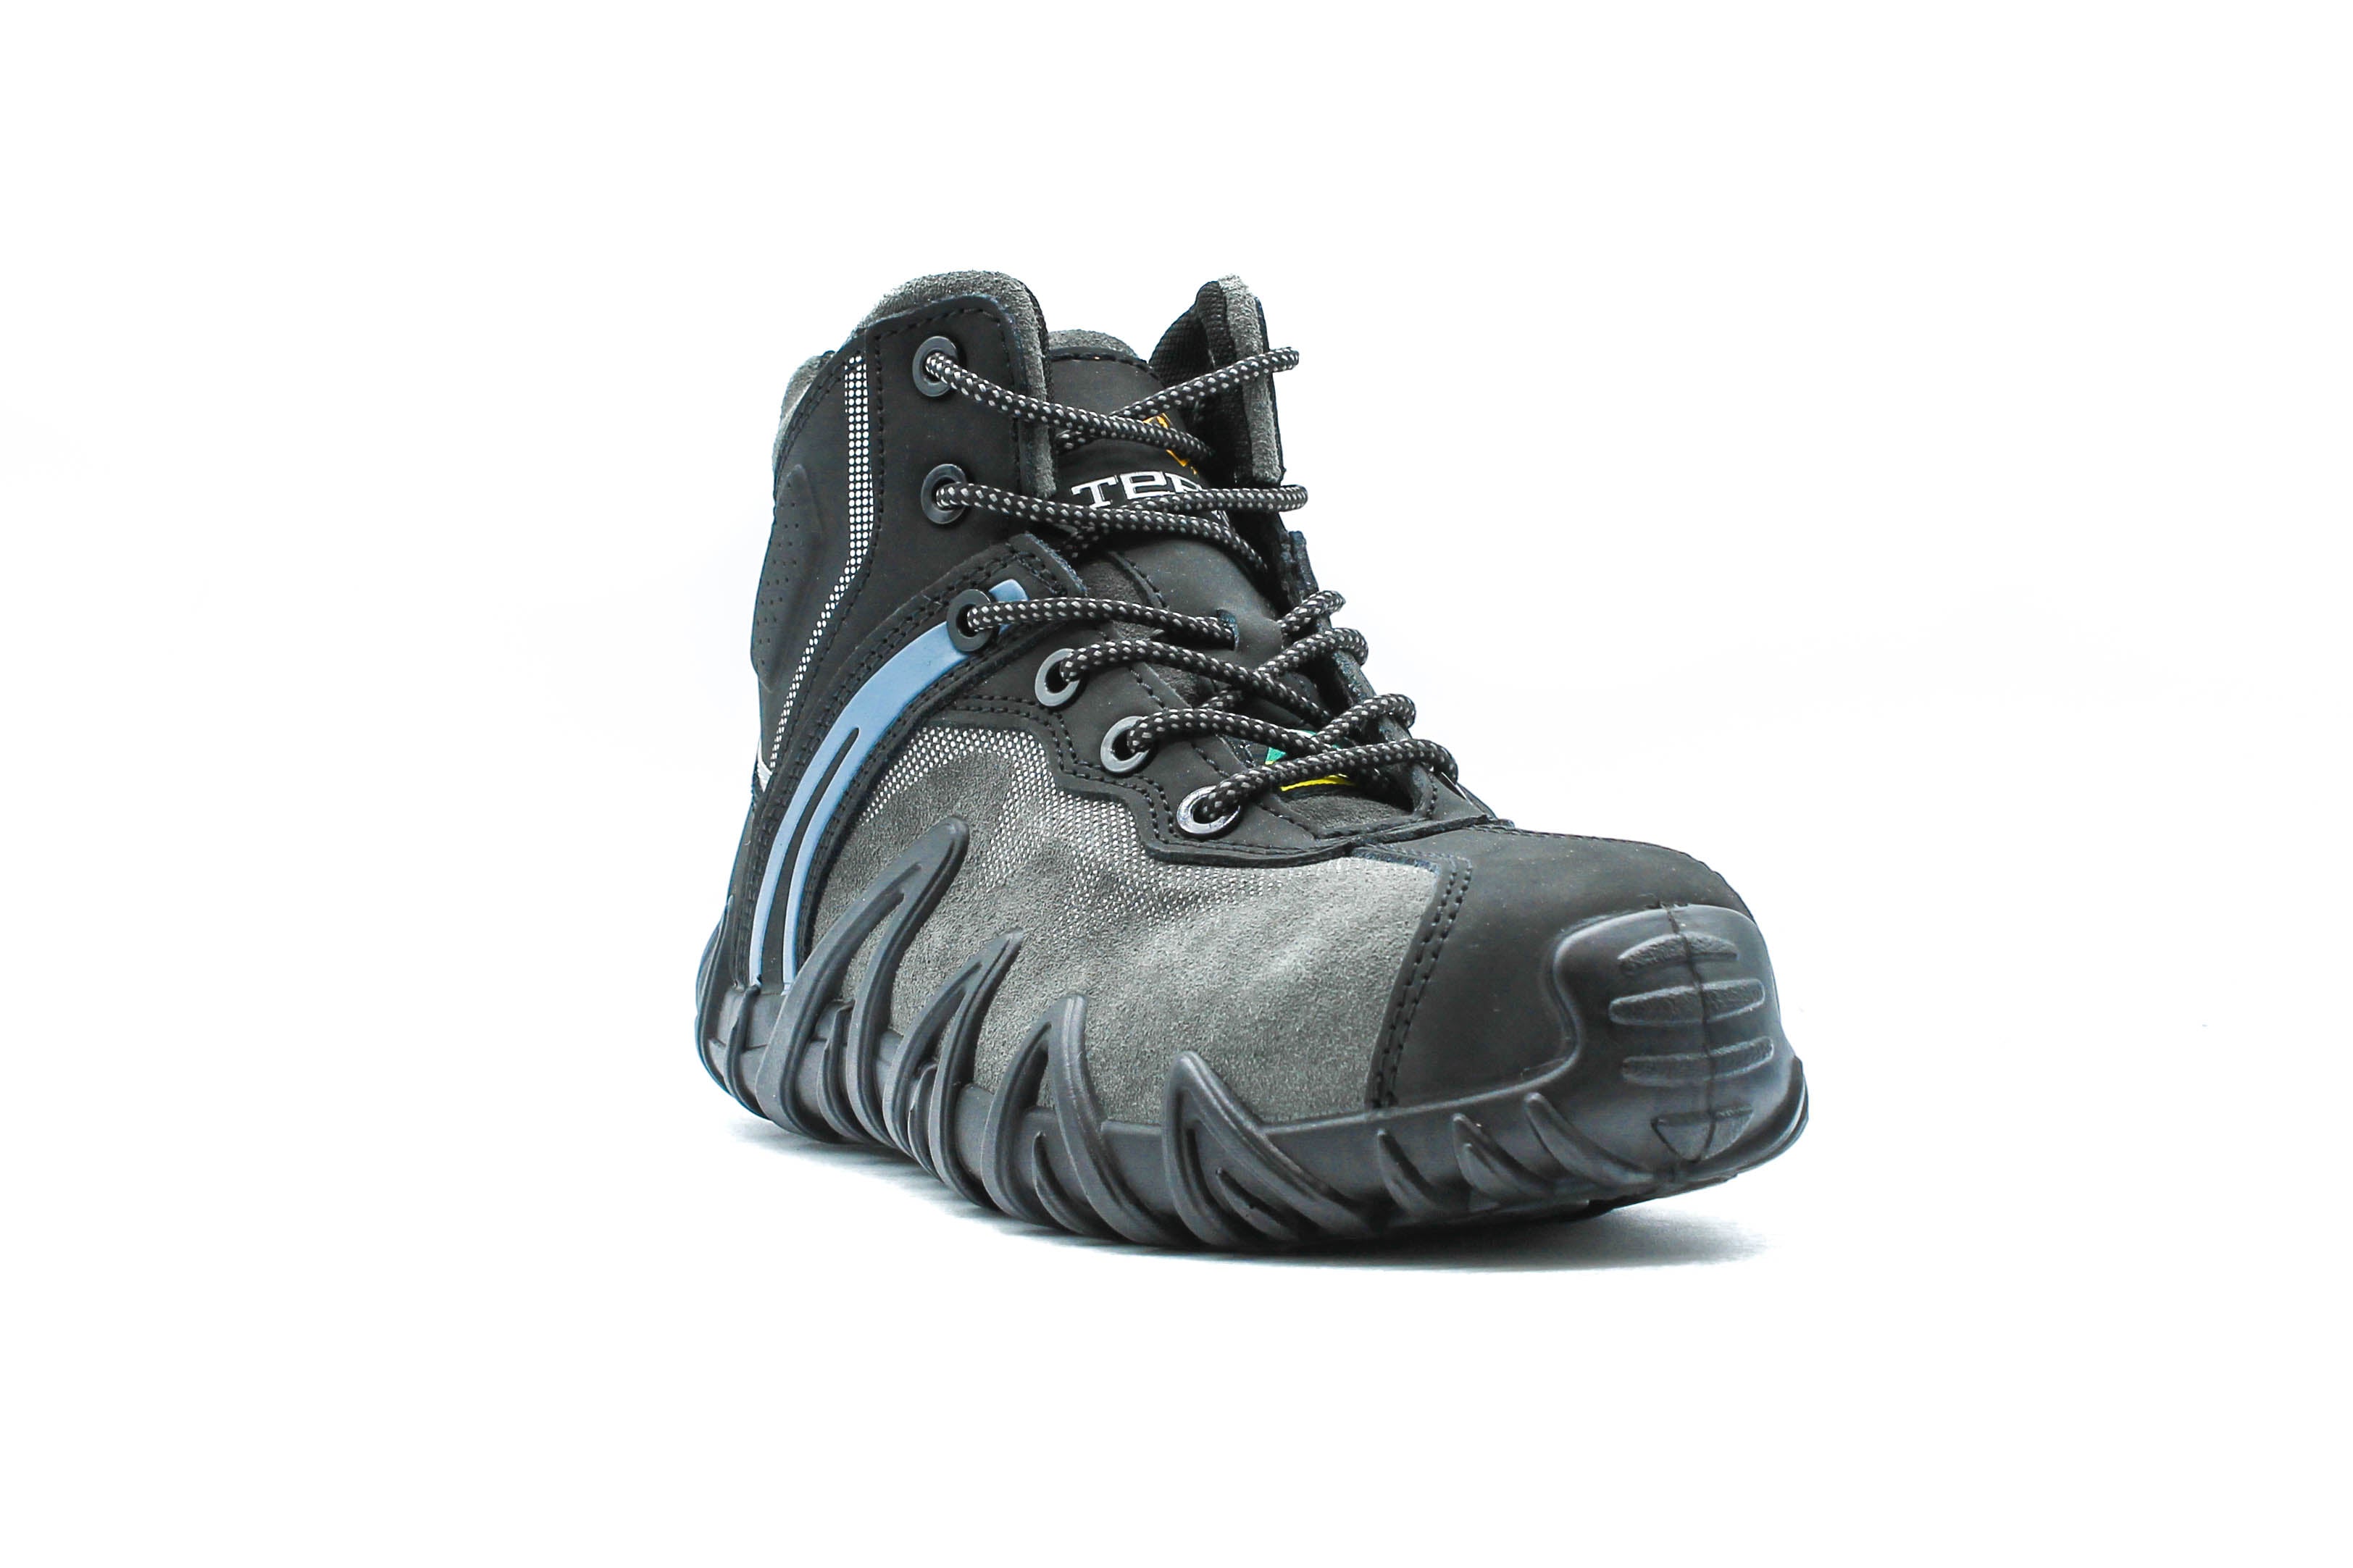 TERRA Venom Mid Composite Toe Safety Work Shoe